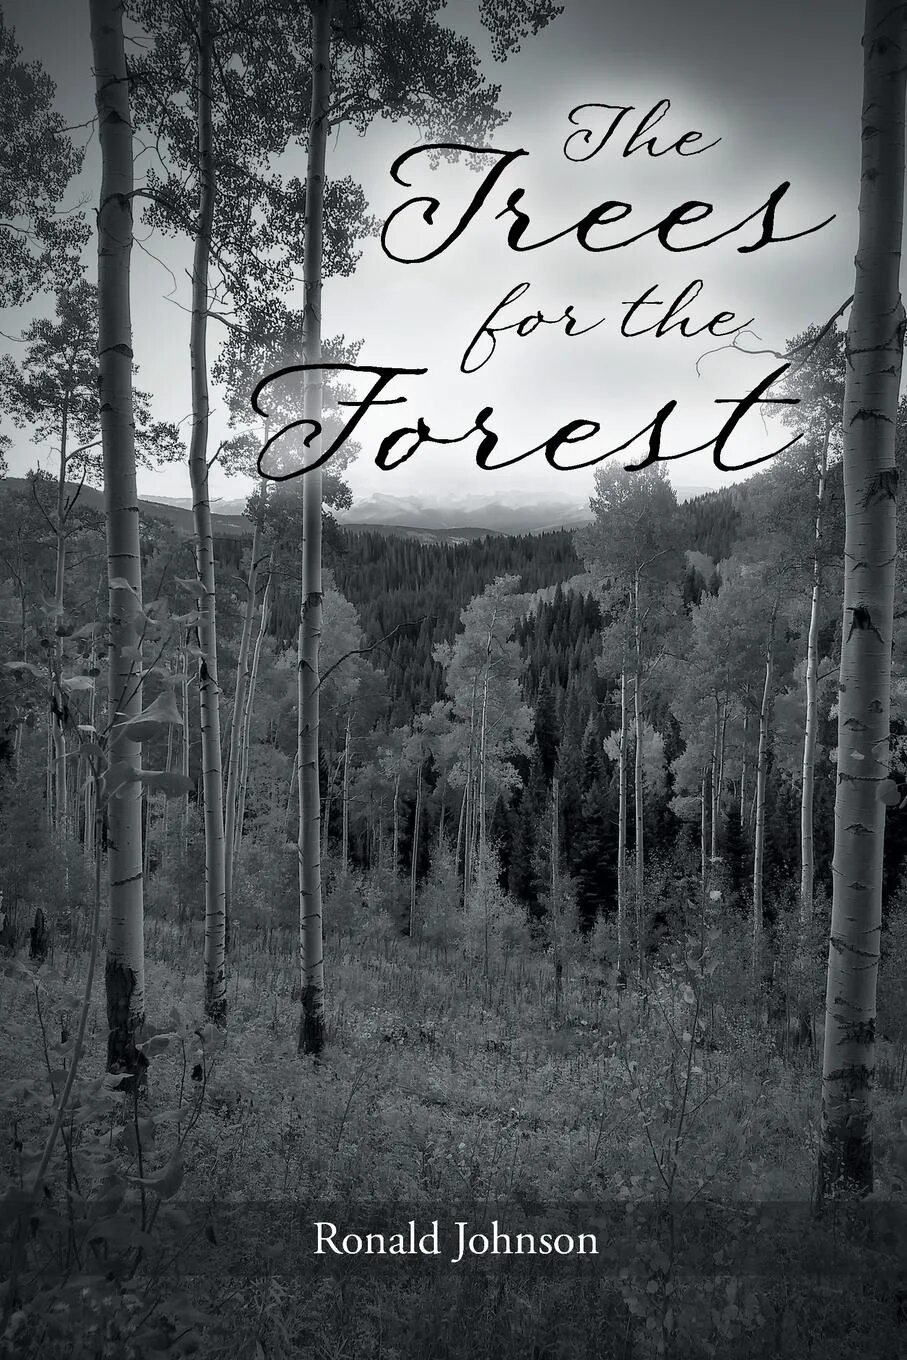 Книга в лесу. Эстетика книг и леса. Серый лес книга. Старая книга в лесу.